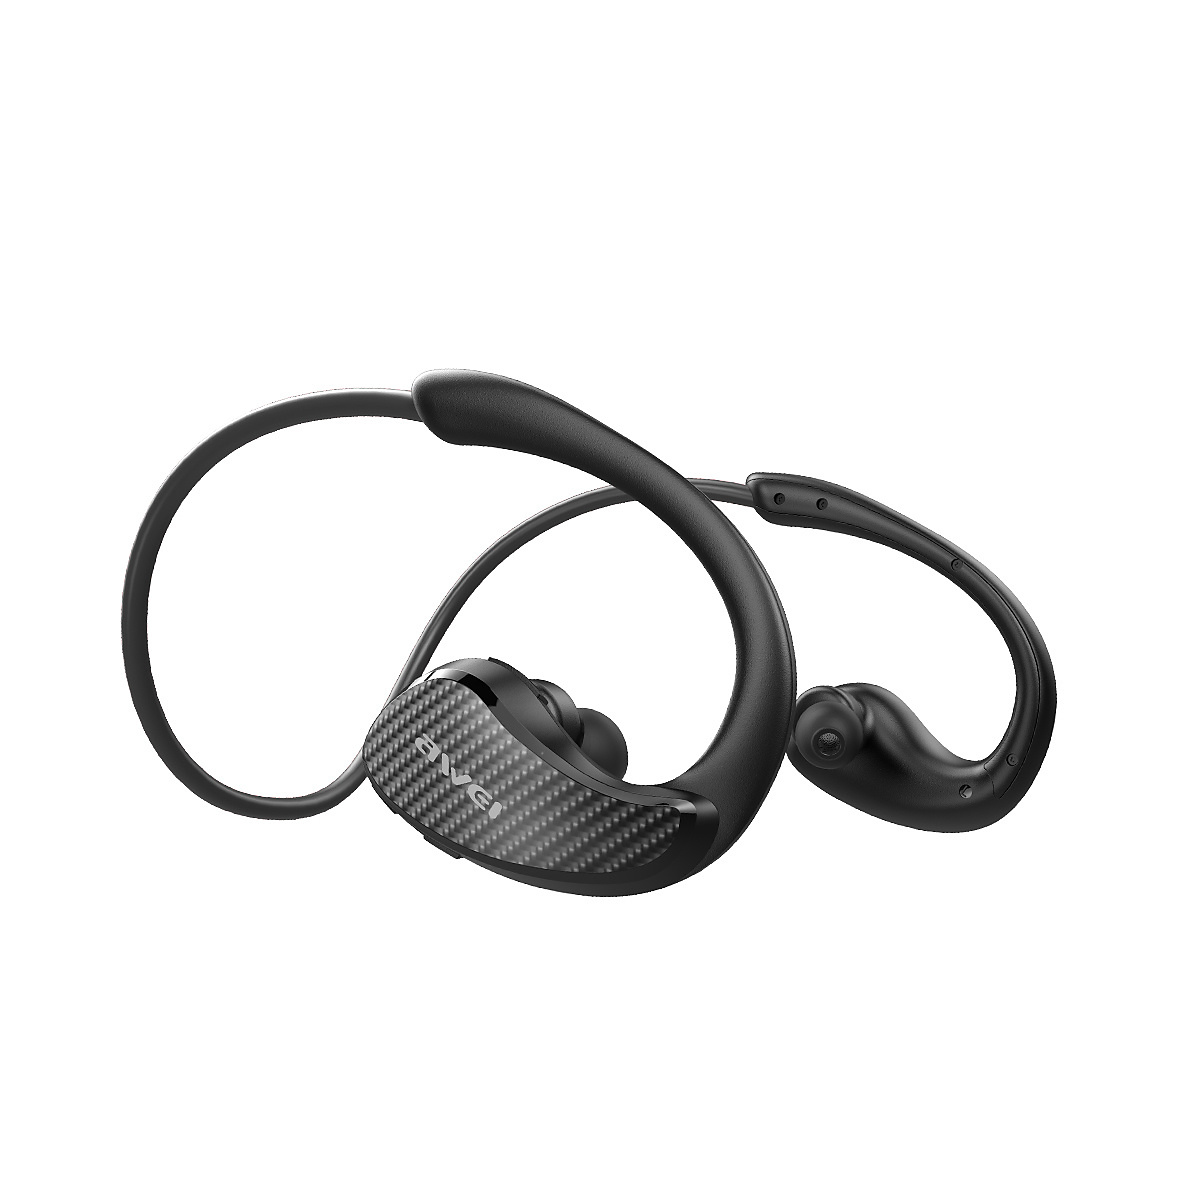 AWEI Bluetooth A881BL 4.2 Vattentäta trådlösa in-ear hörlurar